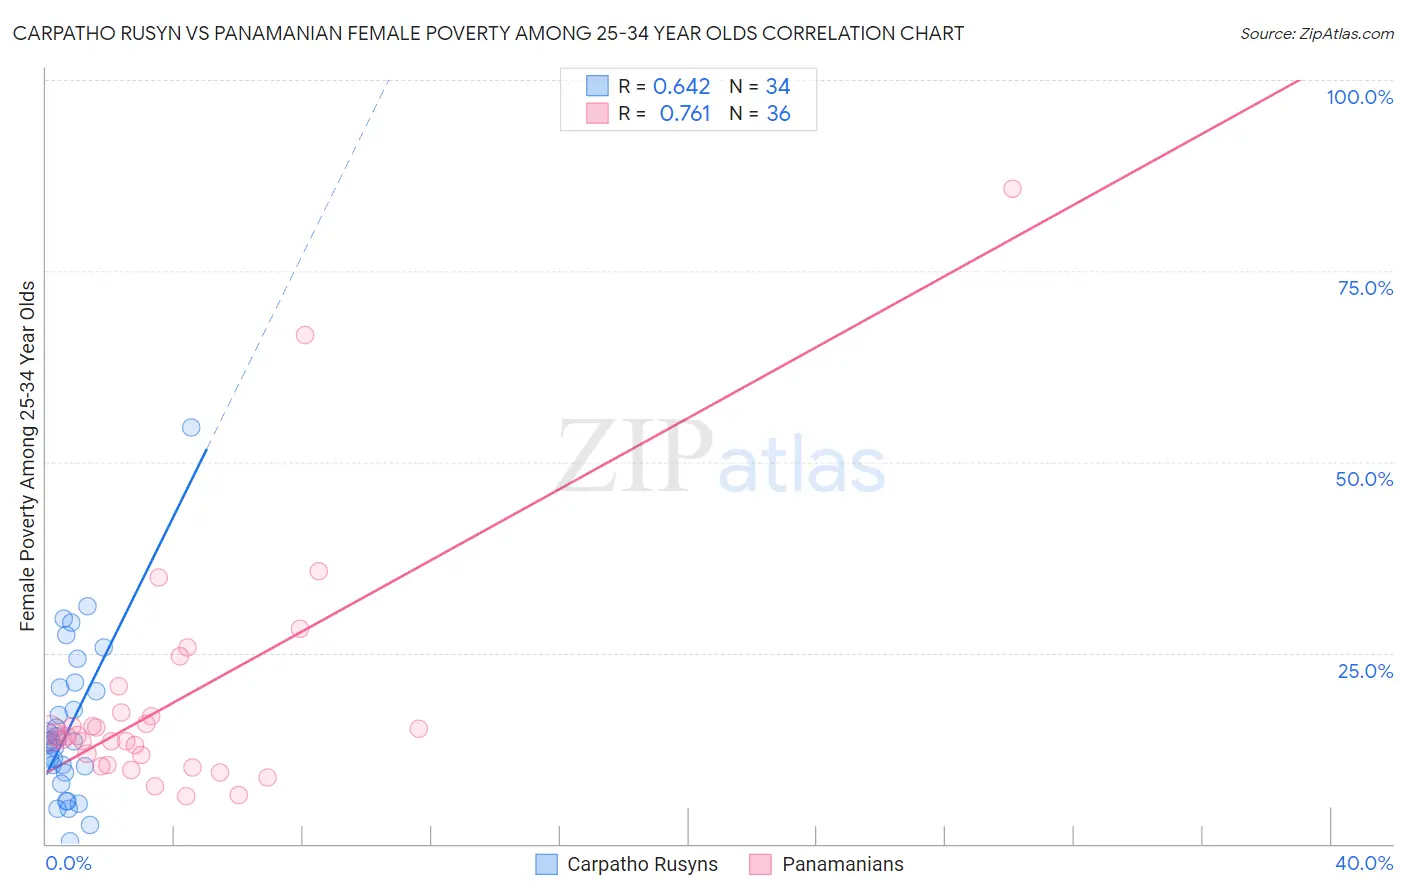 Carpatho Rusyn vs Panamanian Female Poverty Among 25-34 Year Olds